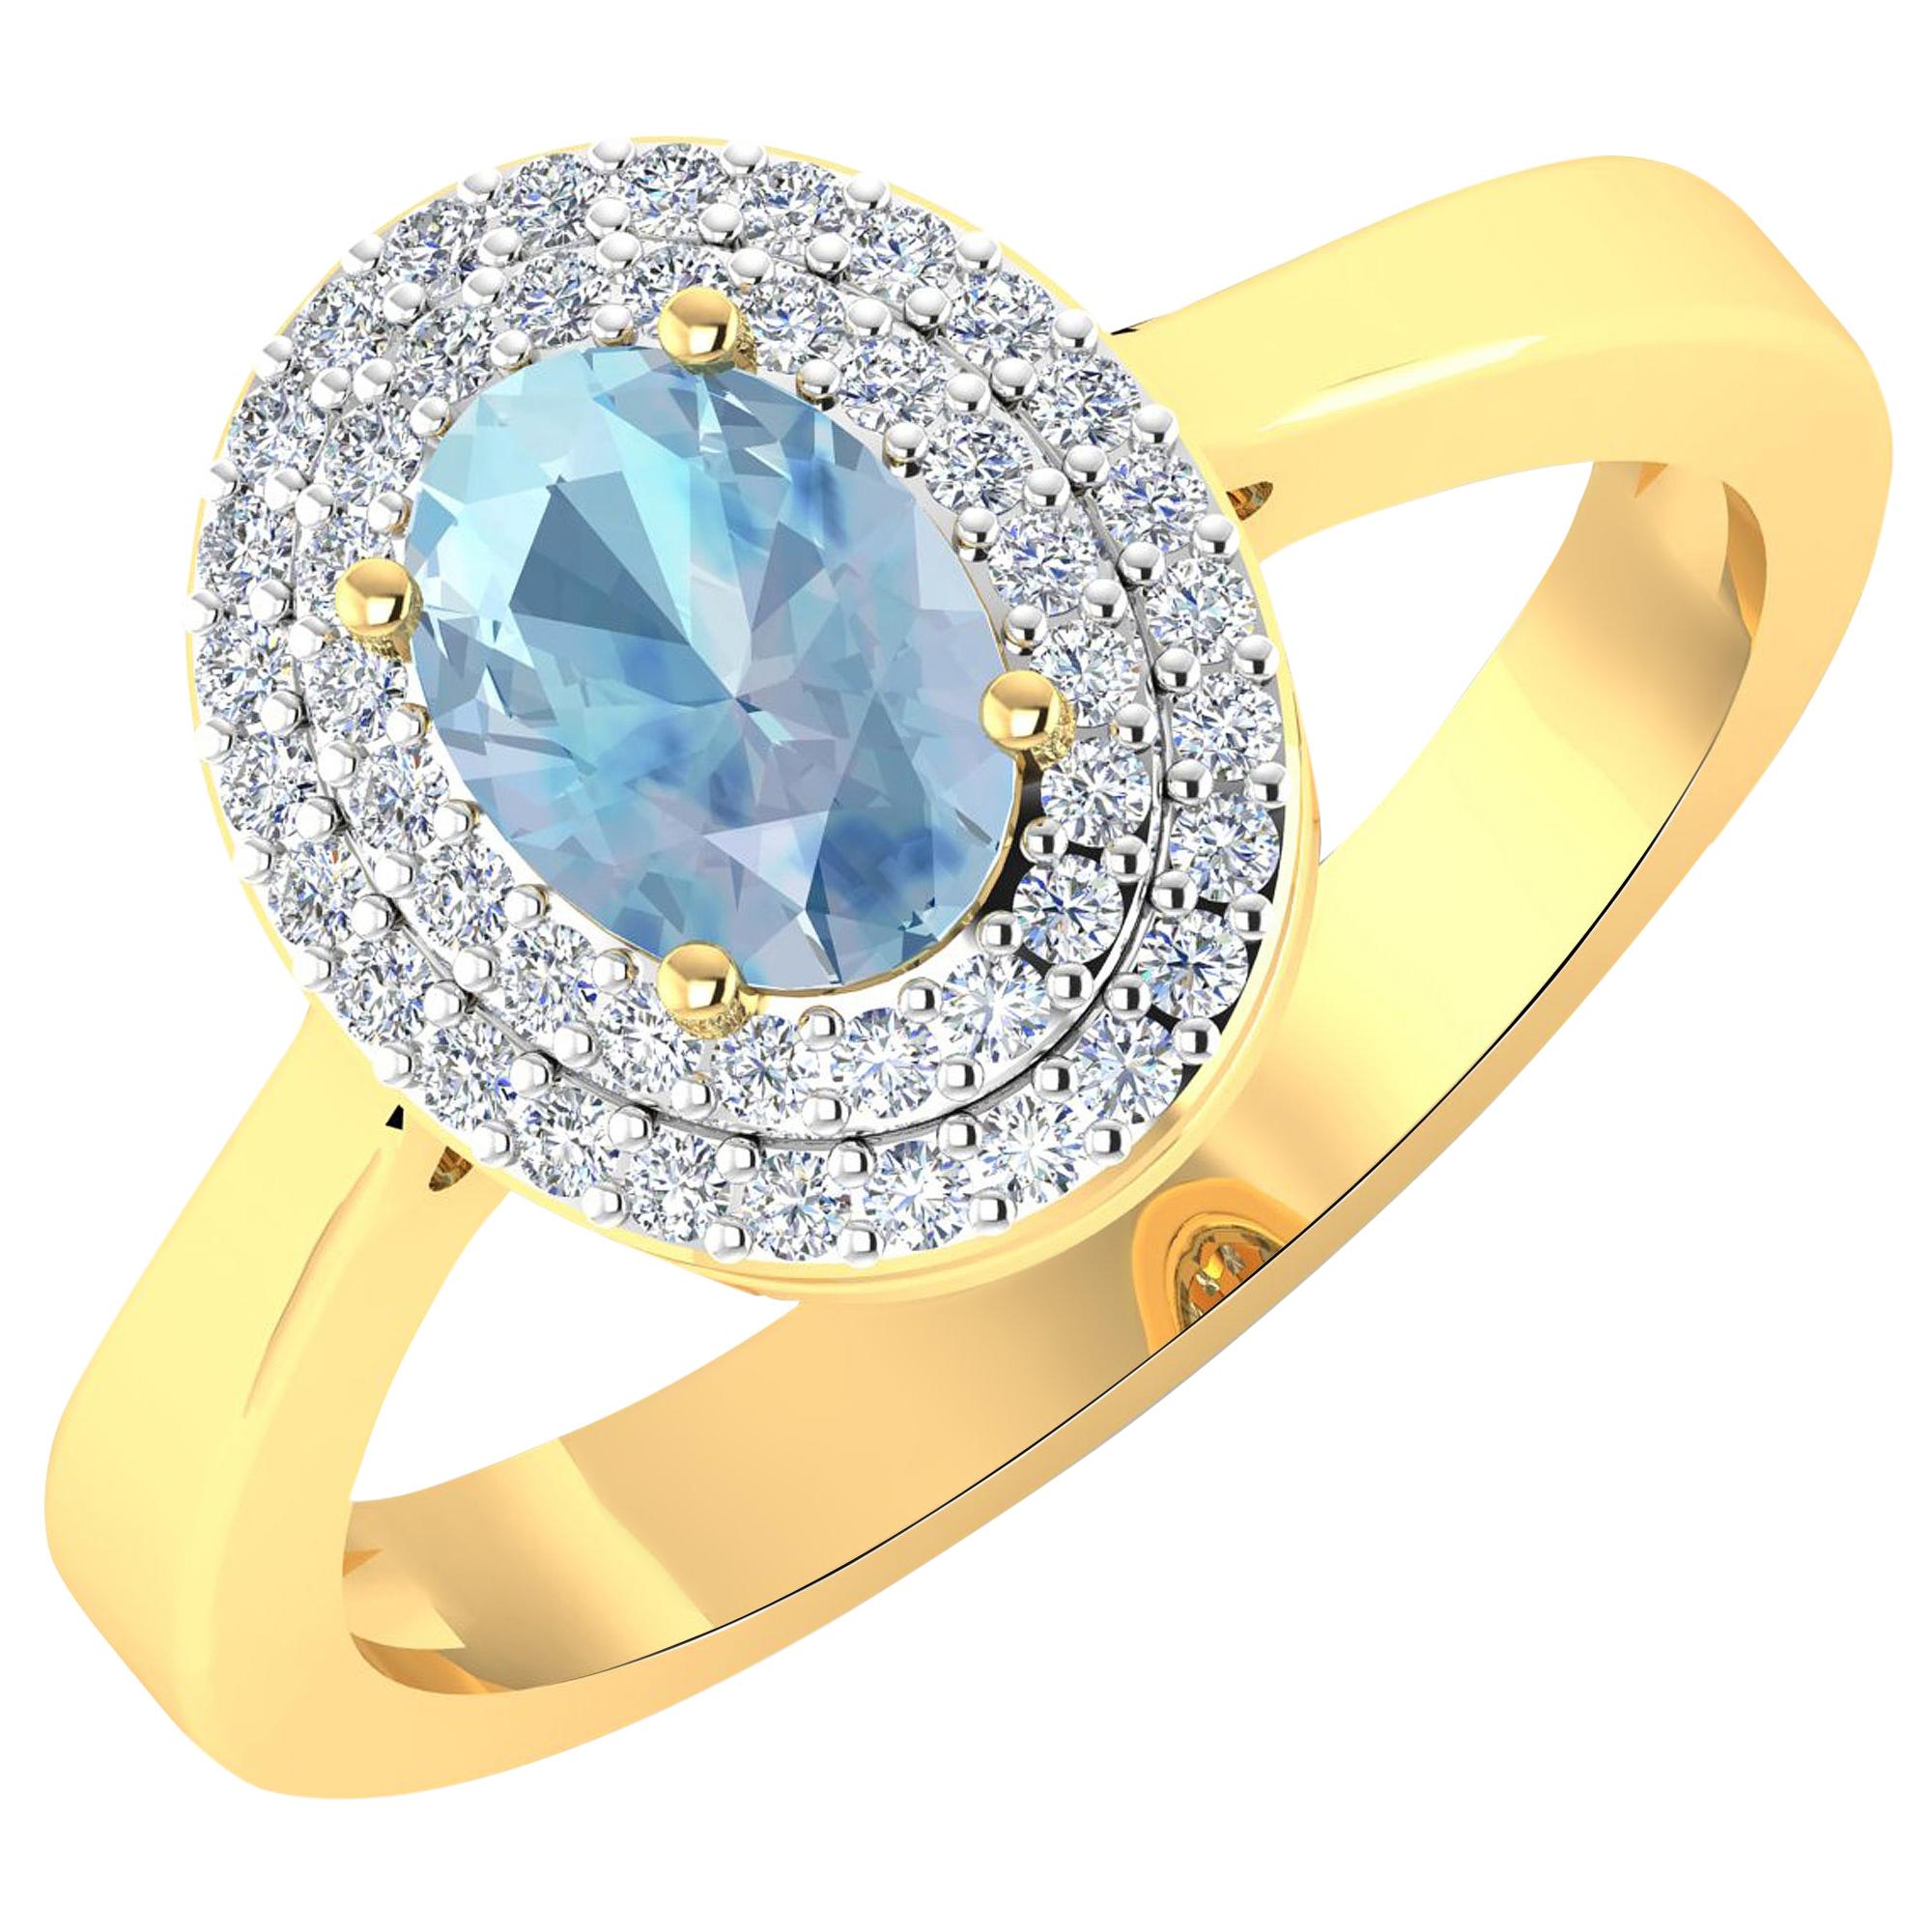 Aquamarine Gold Ring, 14 Karat Gold Aquamarine and Diamond Ring, 0.76 Carat For Sale